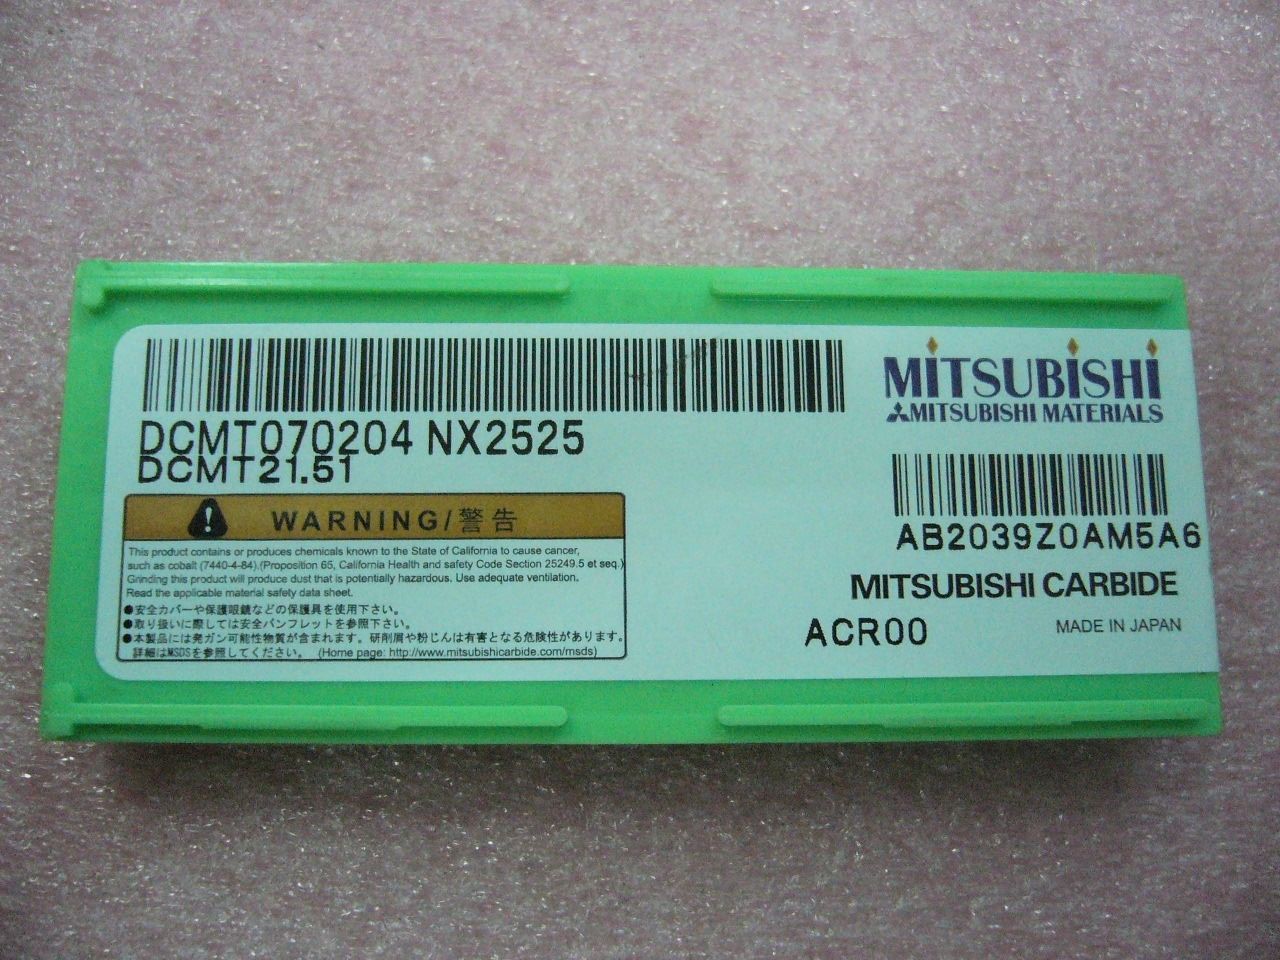 QTY 10x Mitsubishi DCMT21.51 DCMT070204 NX2525 NEW